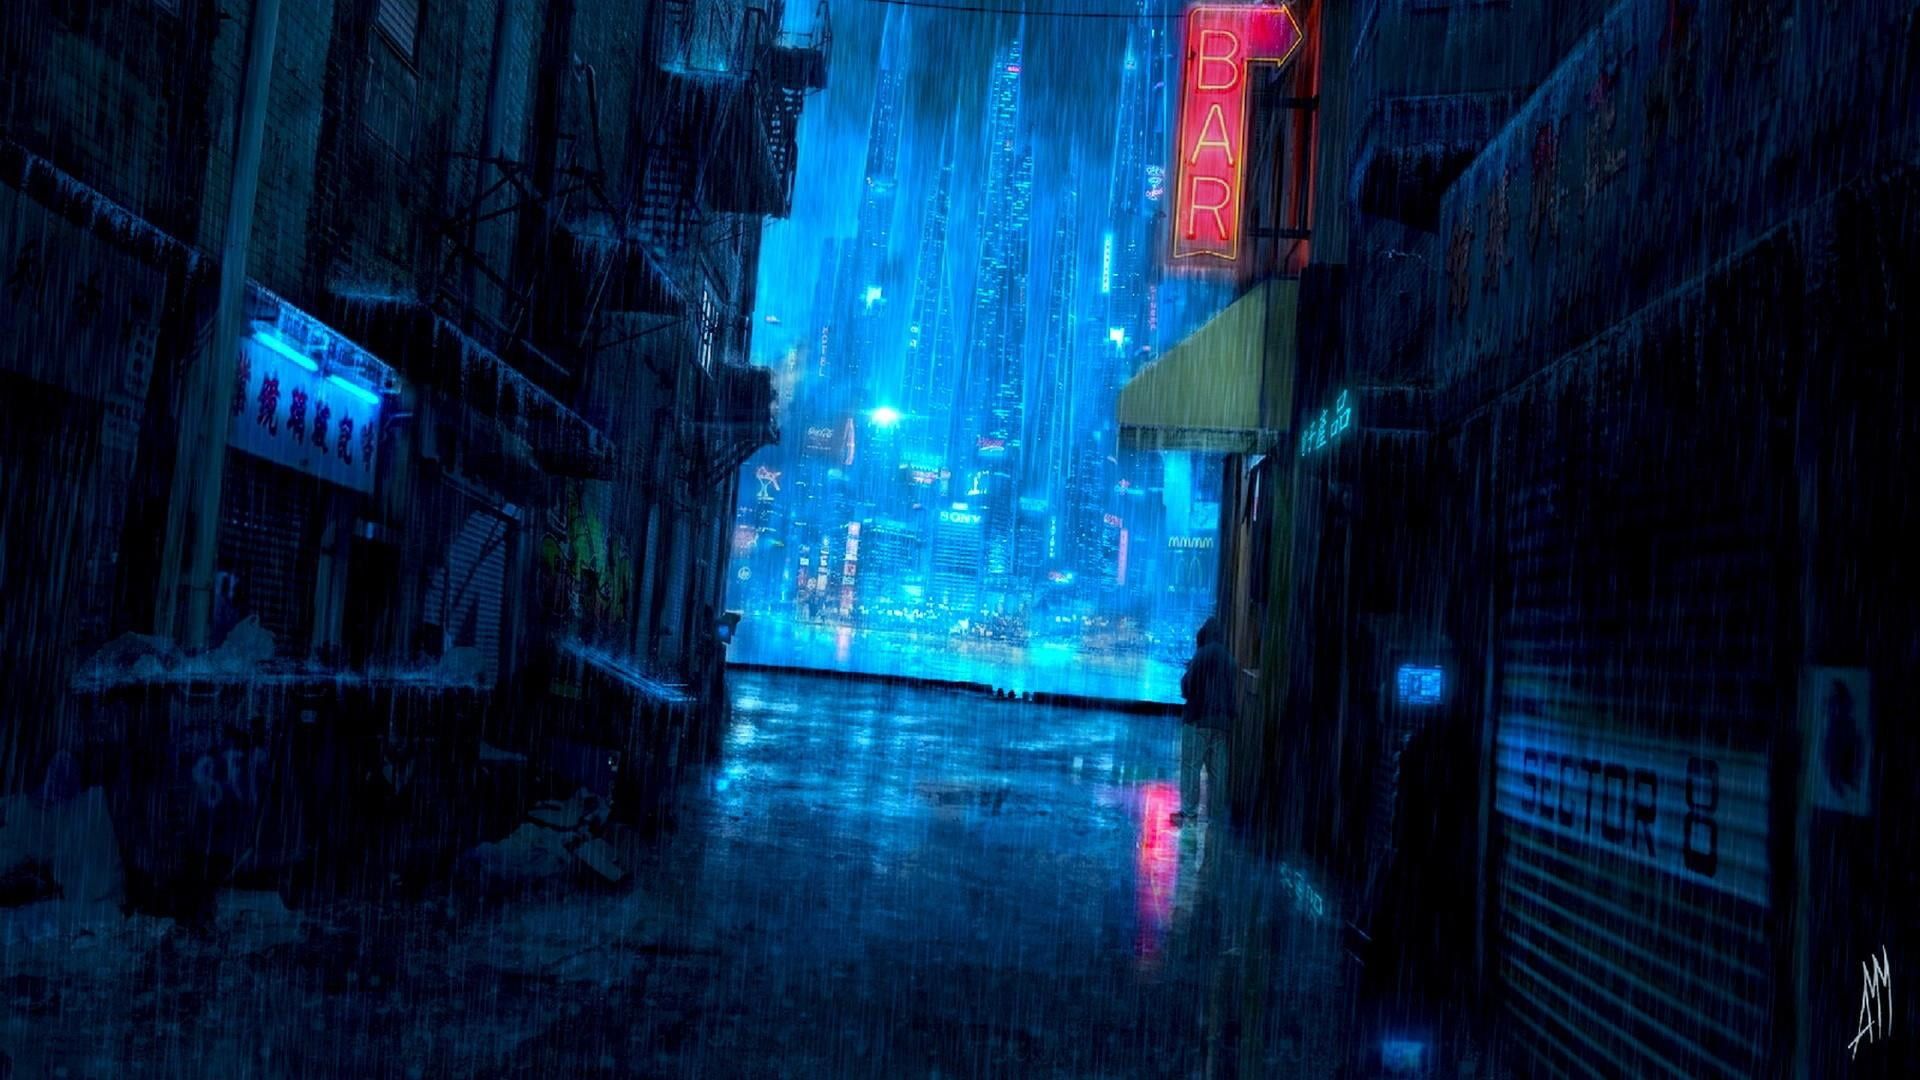 Aesthetic Wallpaper • Cyberpunk rain aesthetic water city lights raining darkness wallpaper • Wallpaper For You The Best Wallpaper For Desktop & Mobile